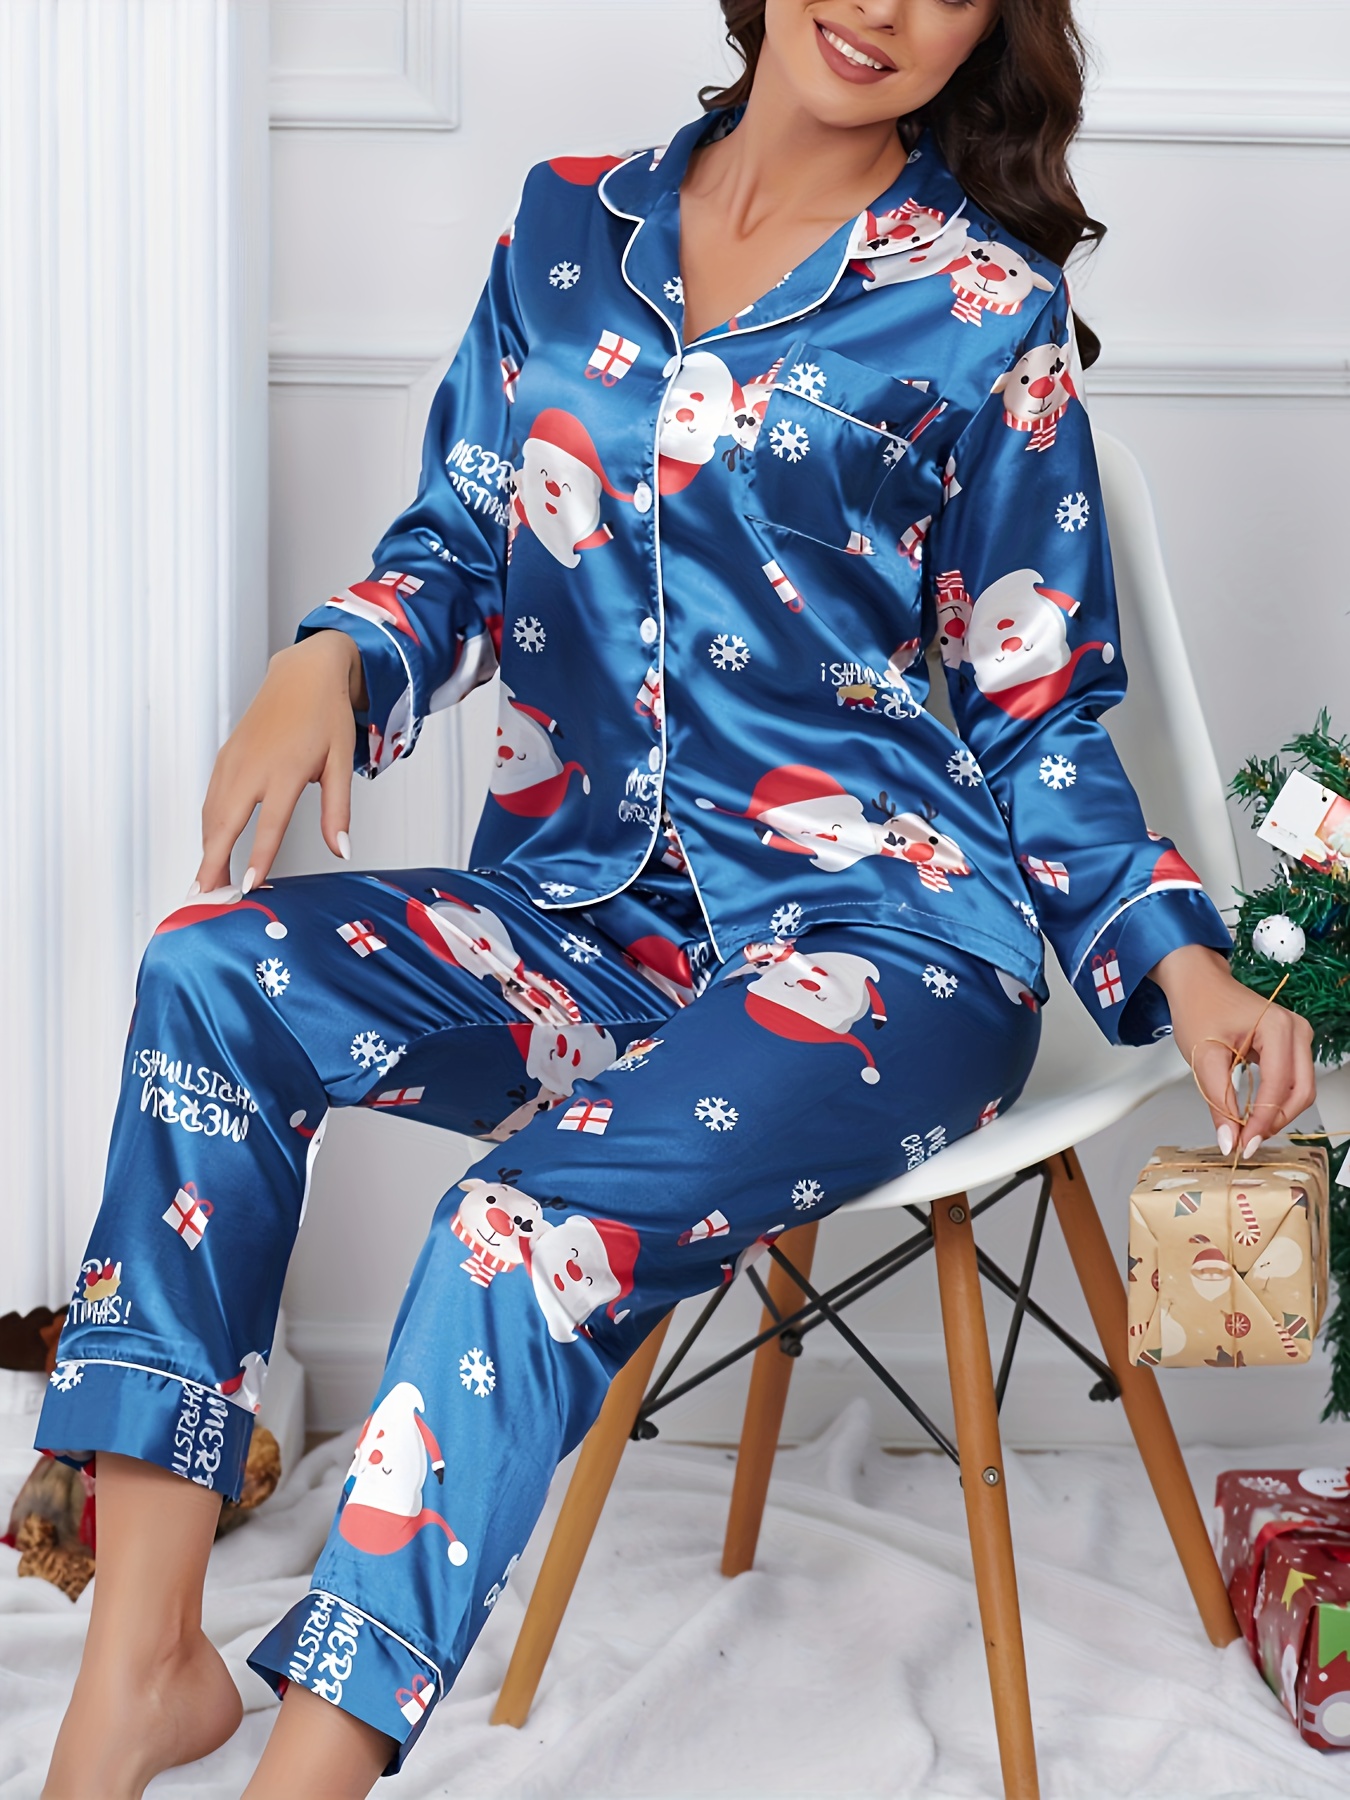 Teen Girls Christmas Long Sleeve Joy Print Thermal Pajamas